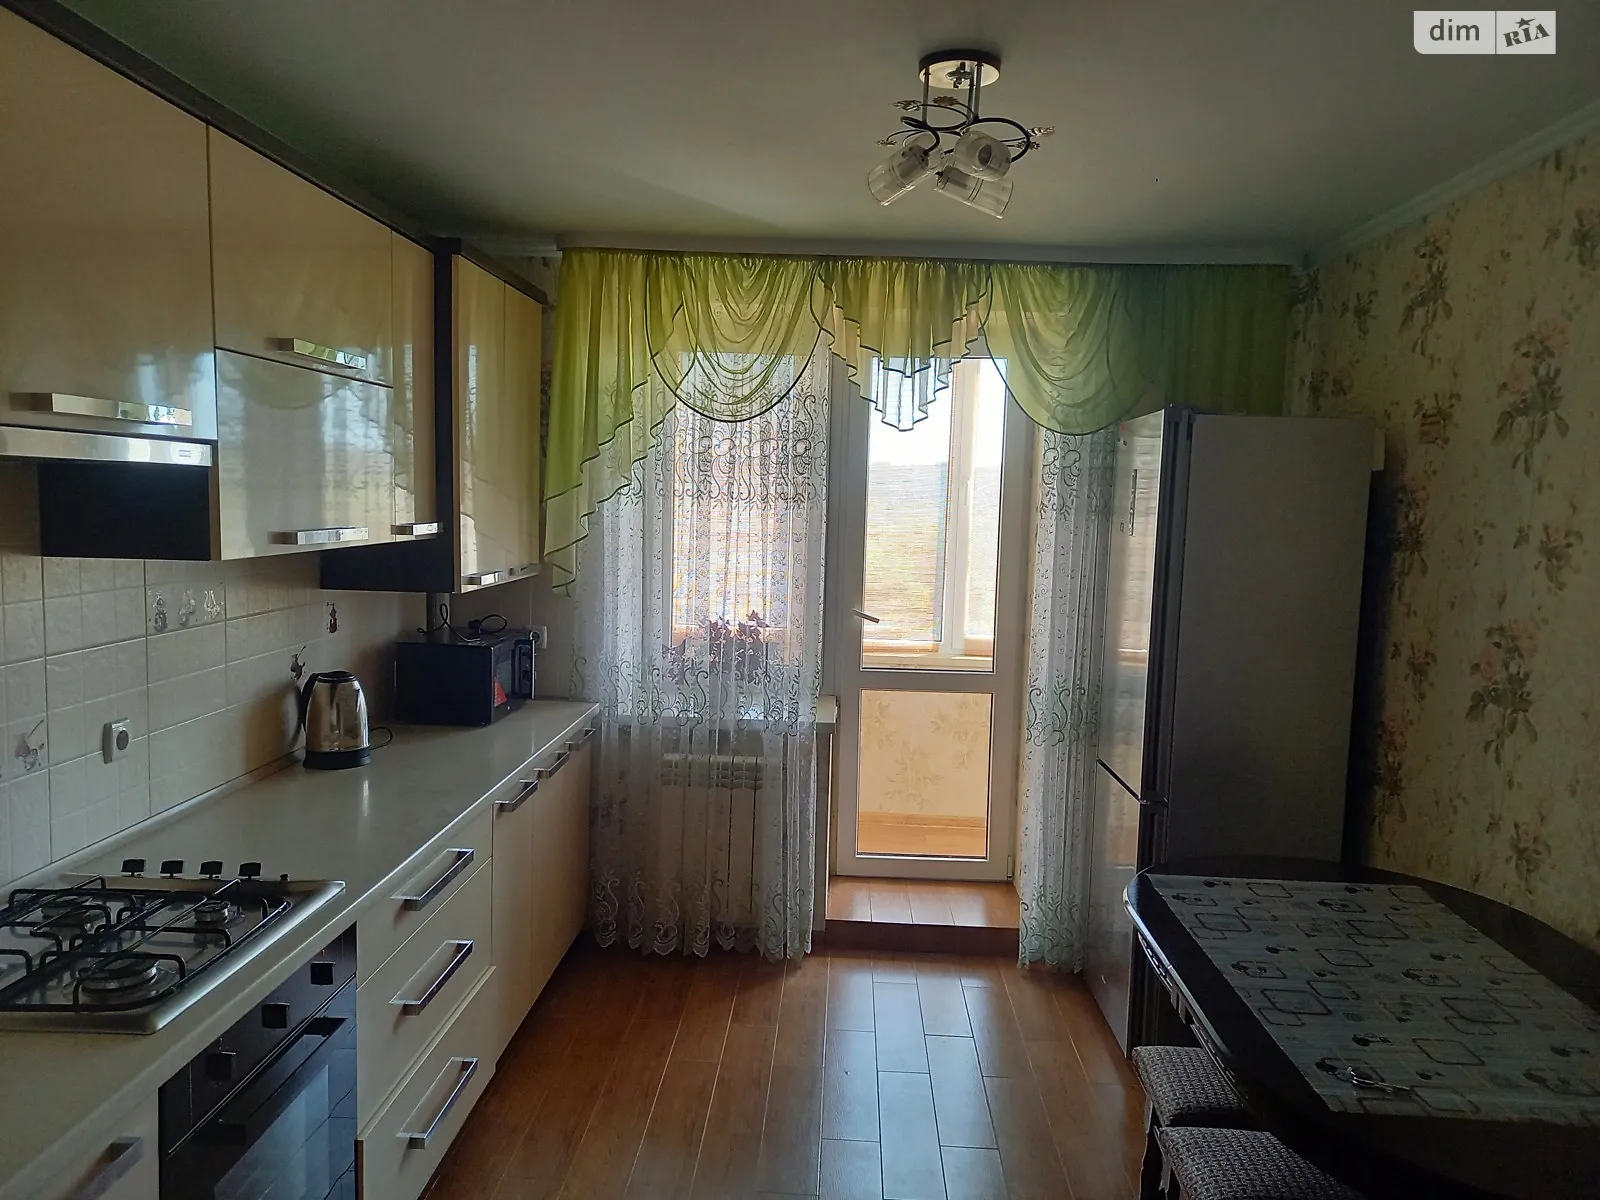 1-кімнатна квартира 43 кв. м у Тернополі, цена: 220 $ - фото 1